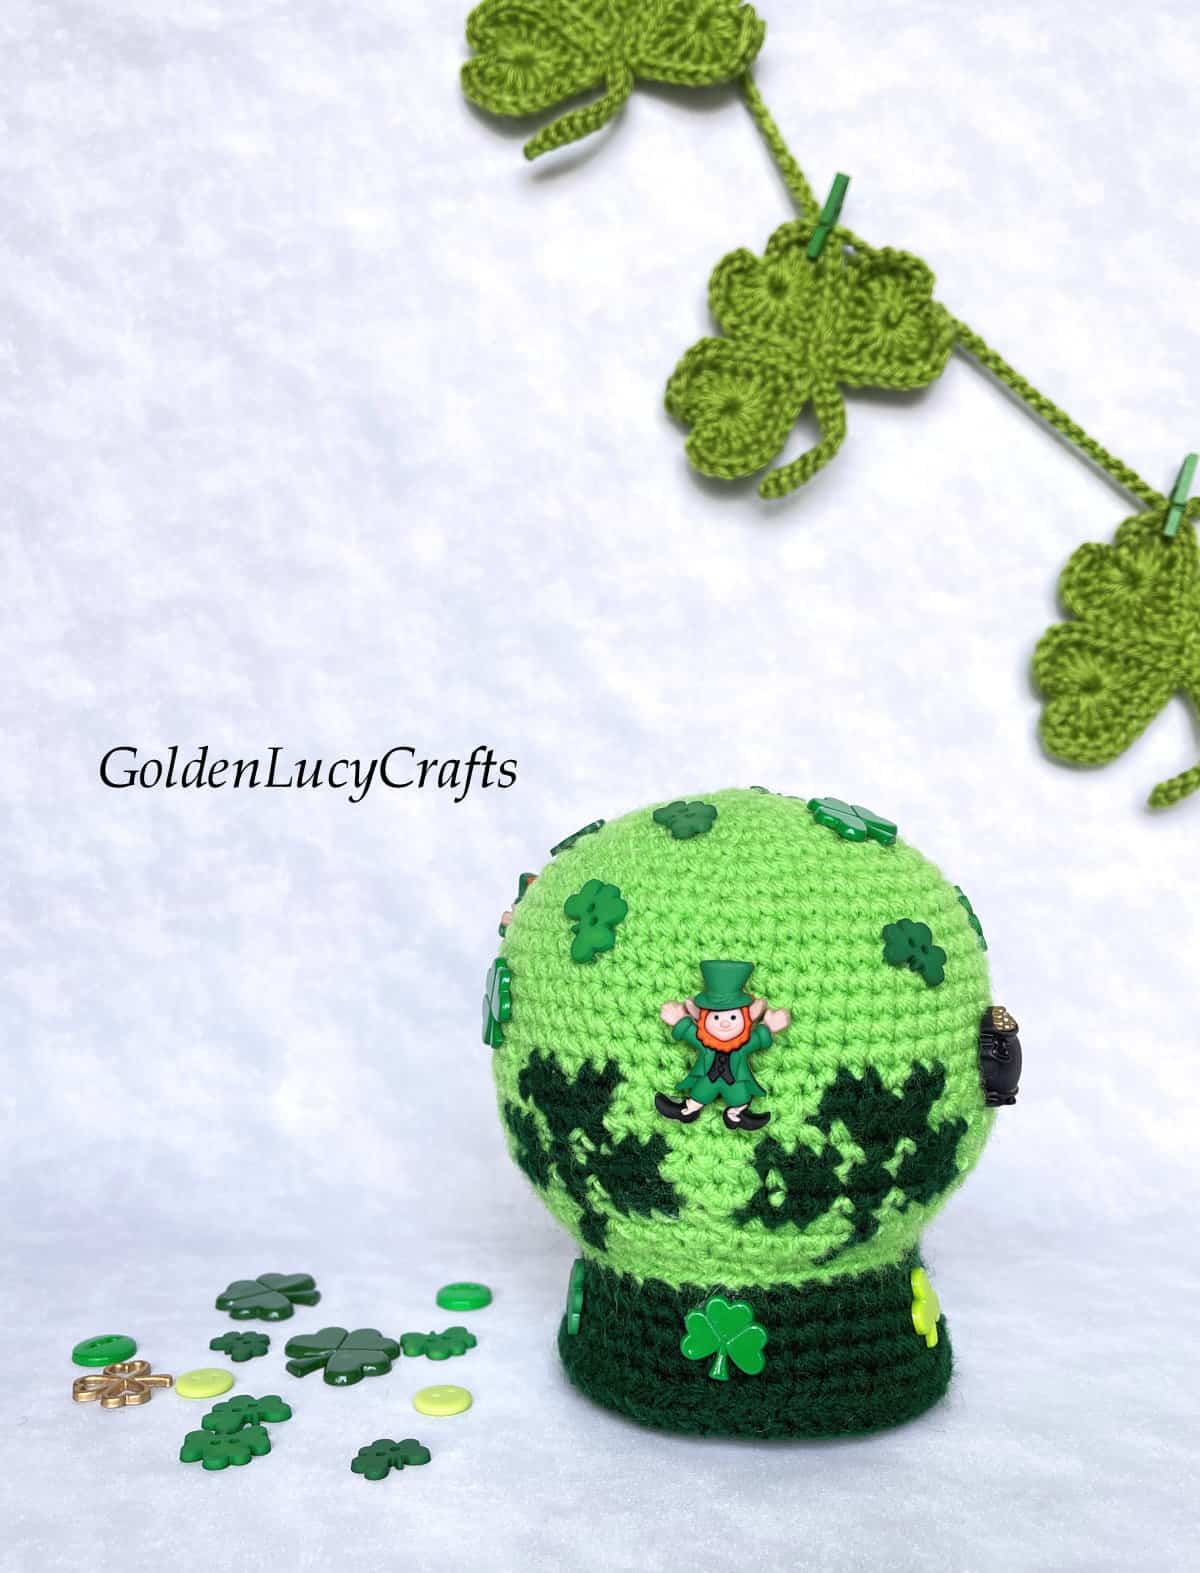 Crochet snow globe amigurumi for St. Patrick's Day.